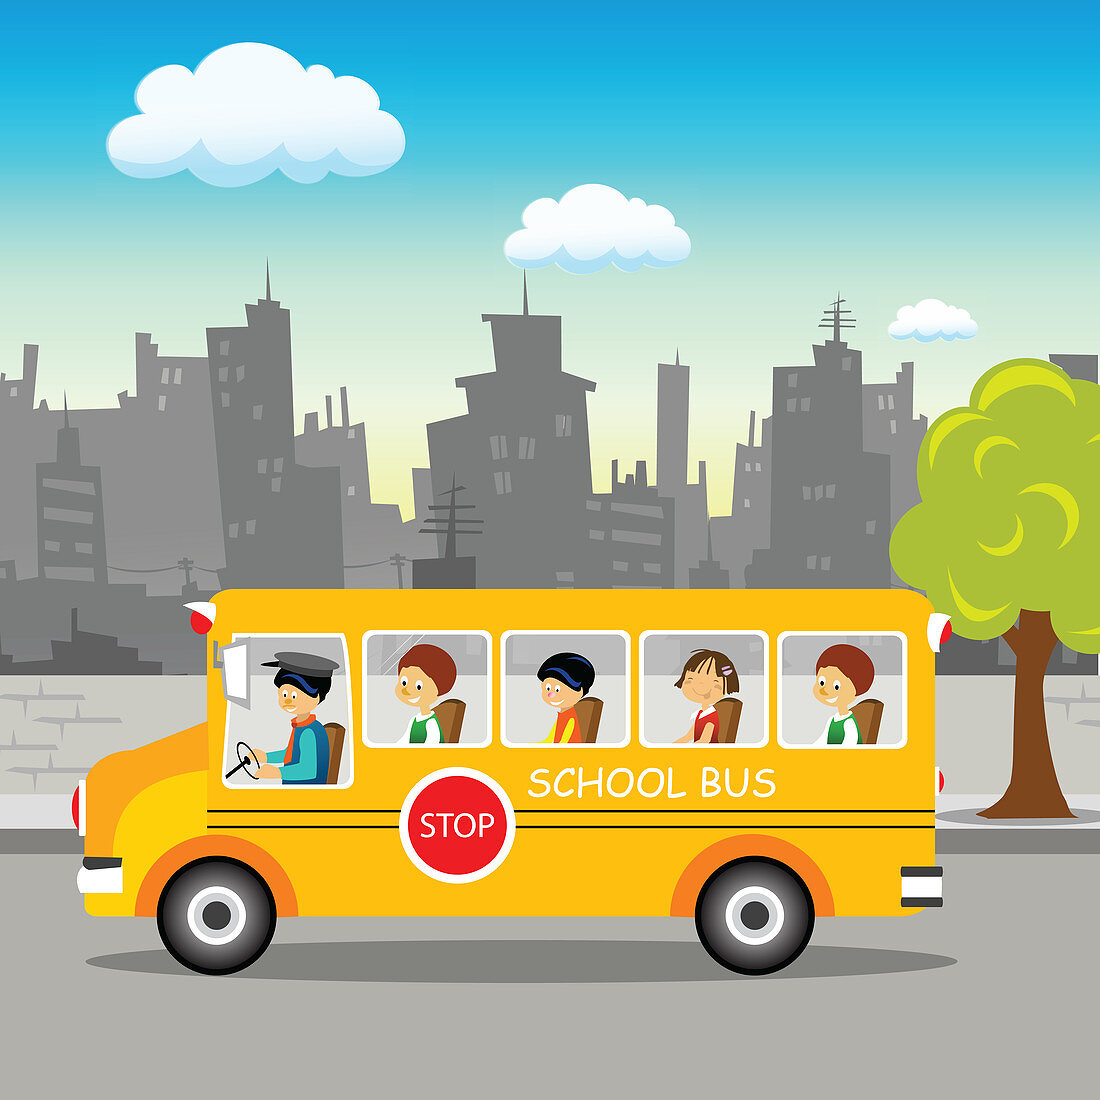 School bus on its way, illustration